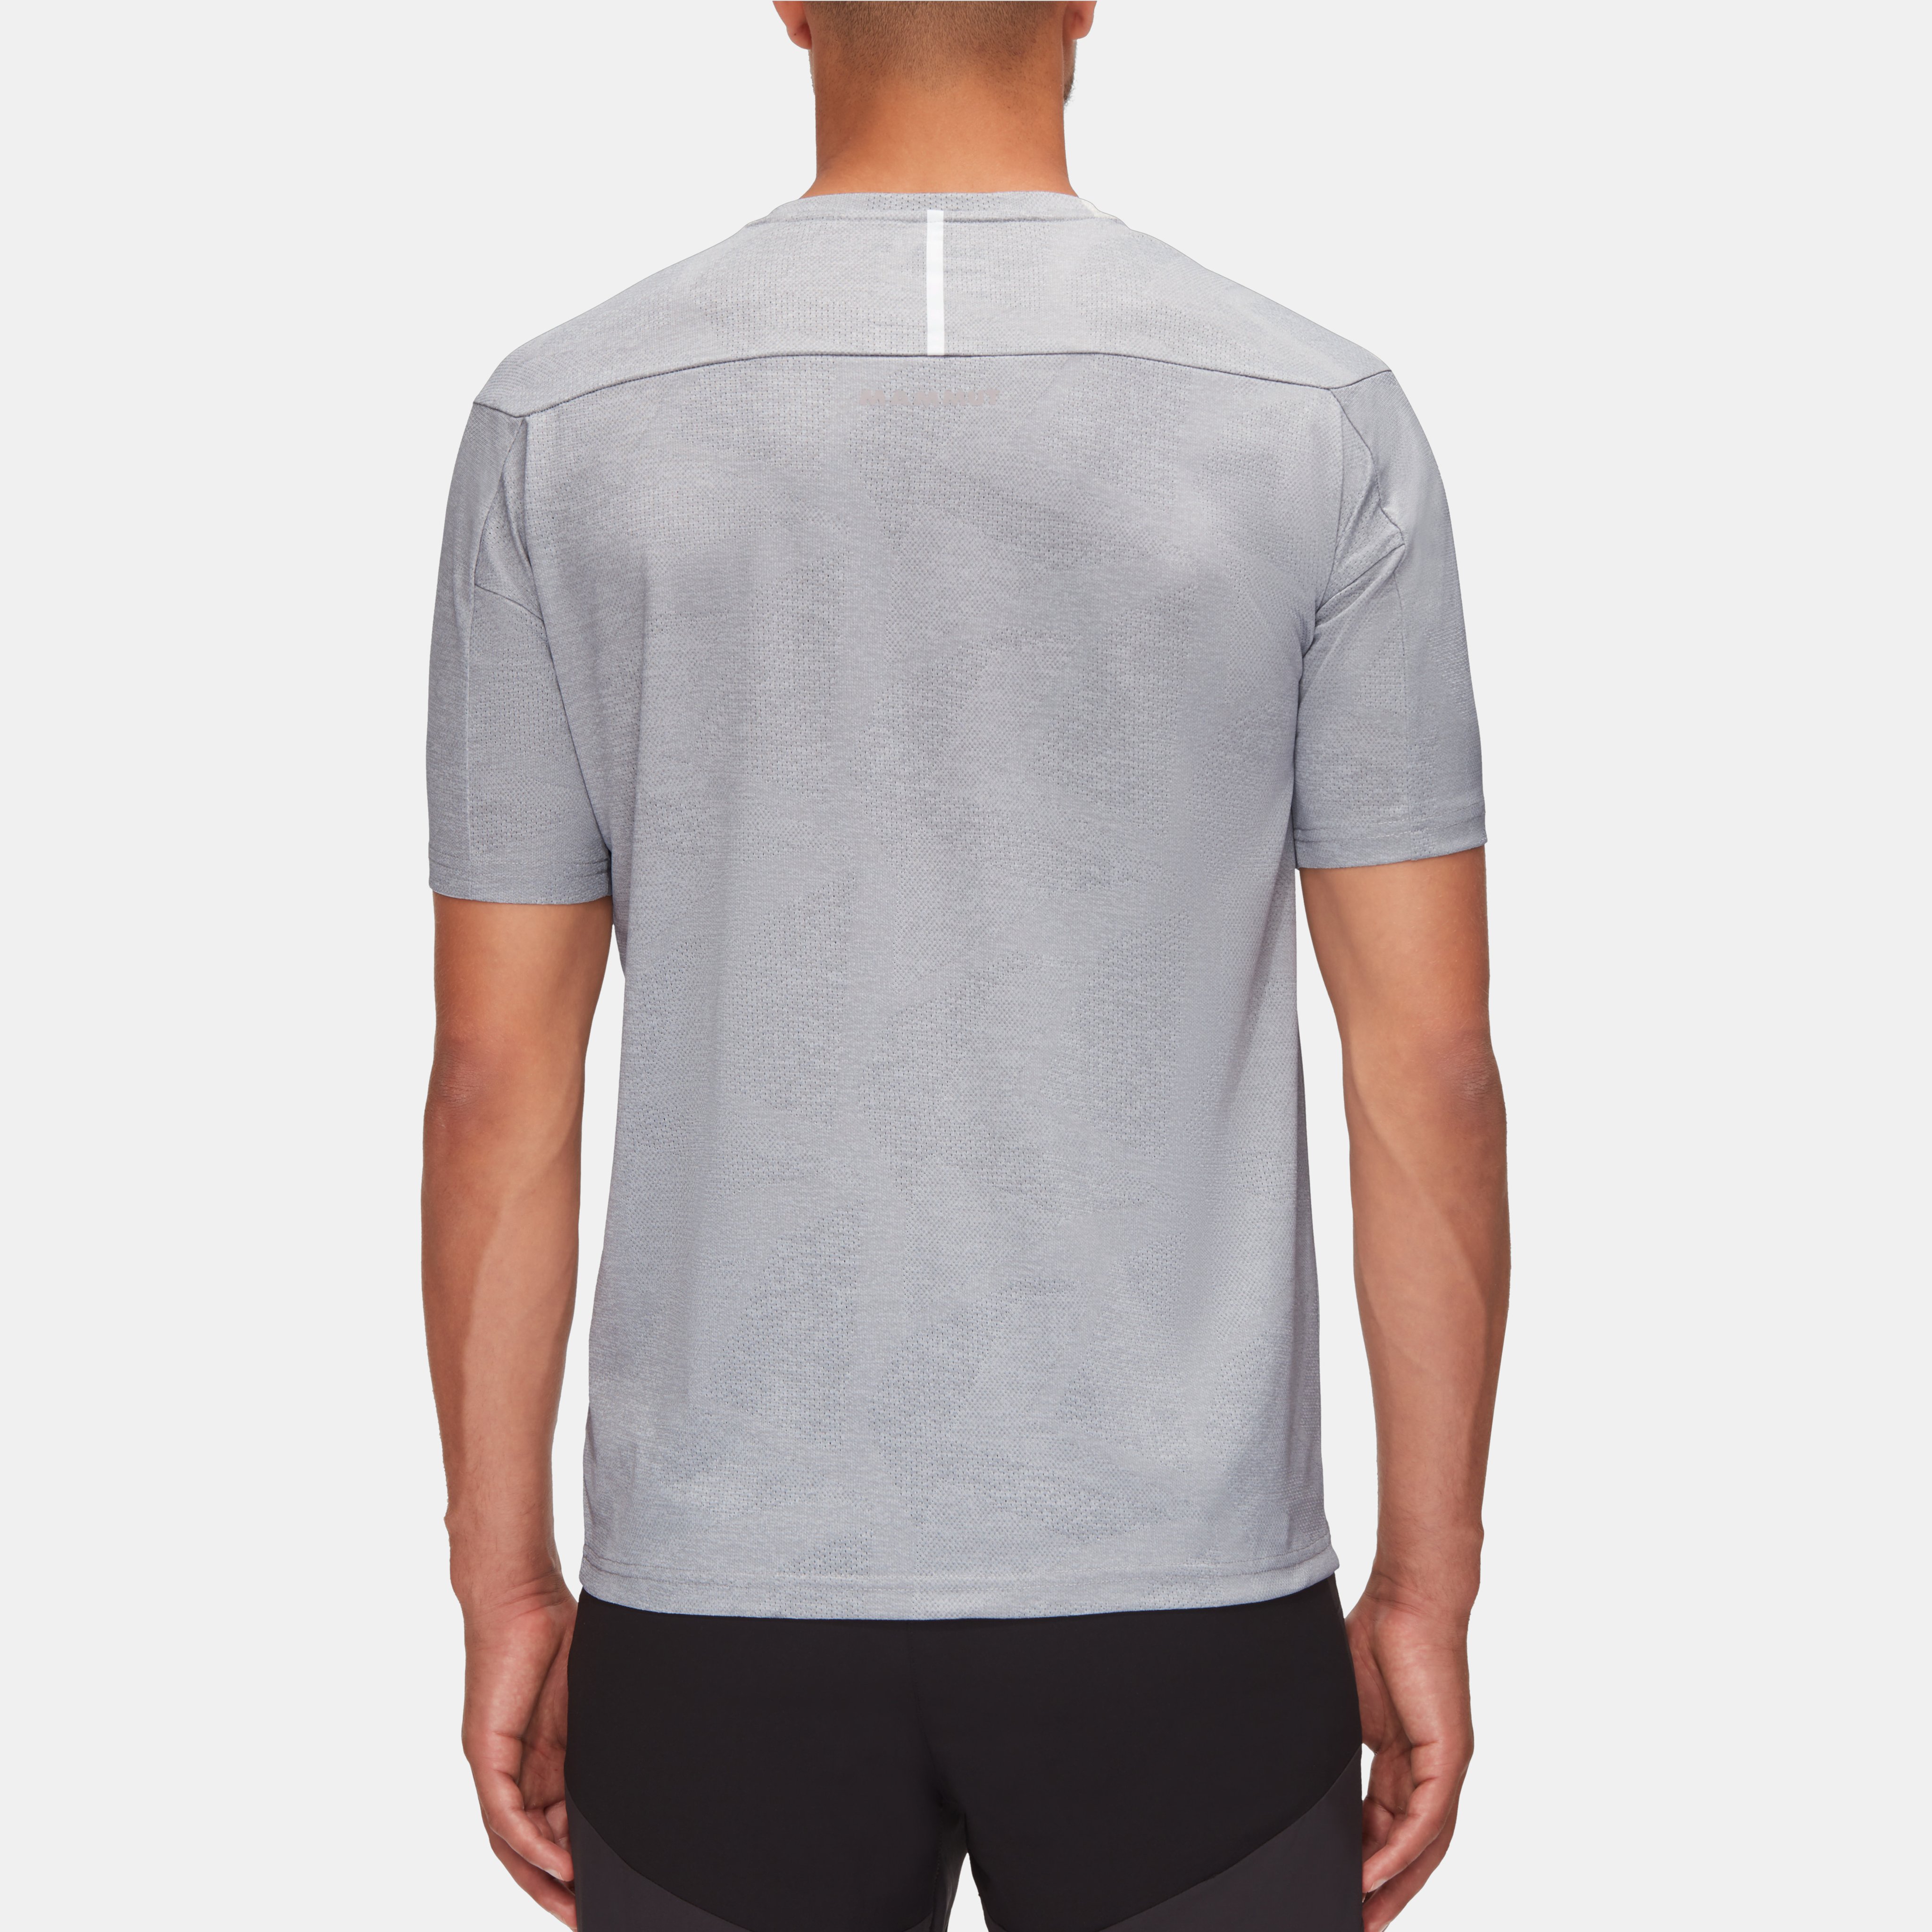 Crashiano T-Shirt Men product image